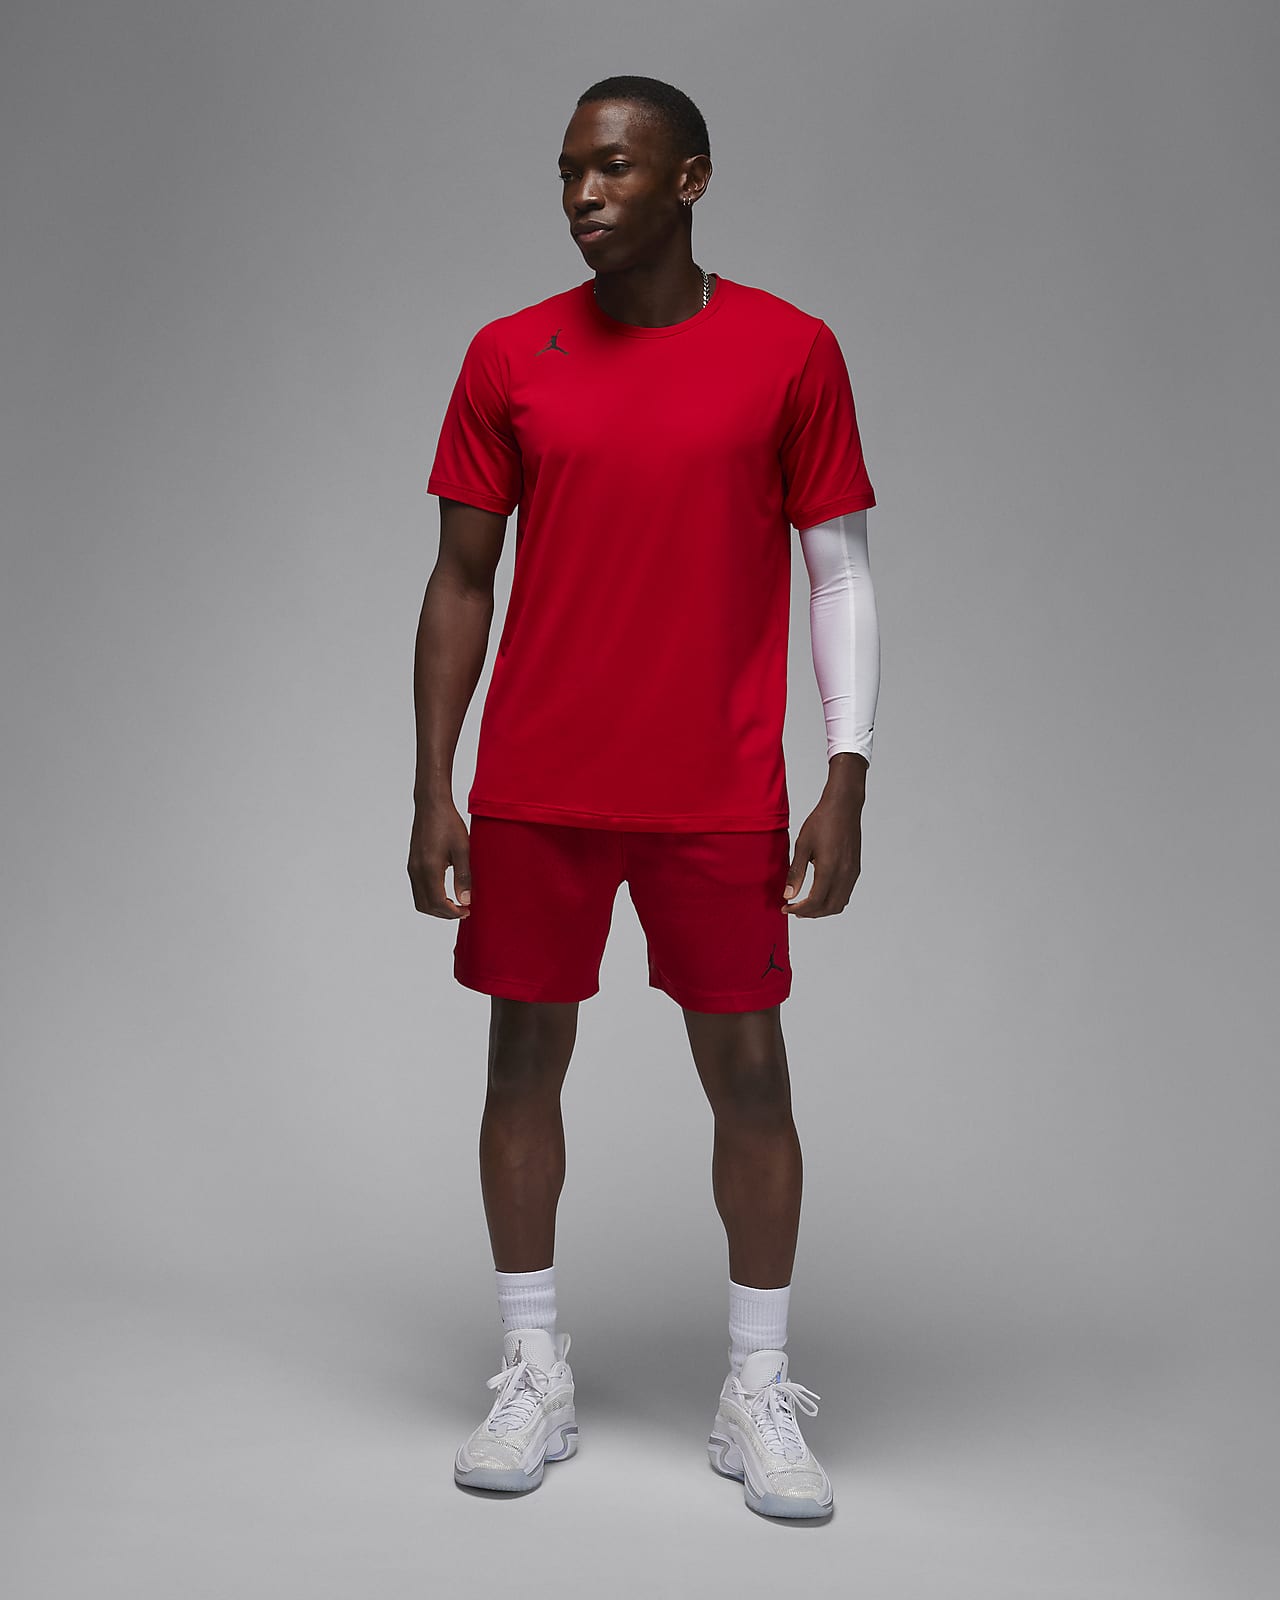 Jordan Dri-FIT Sport Men's Shorts. Nike HR